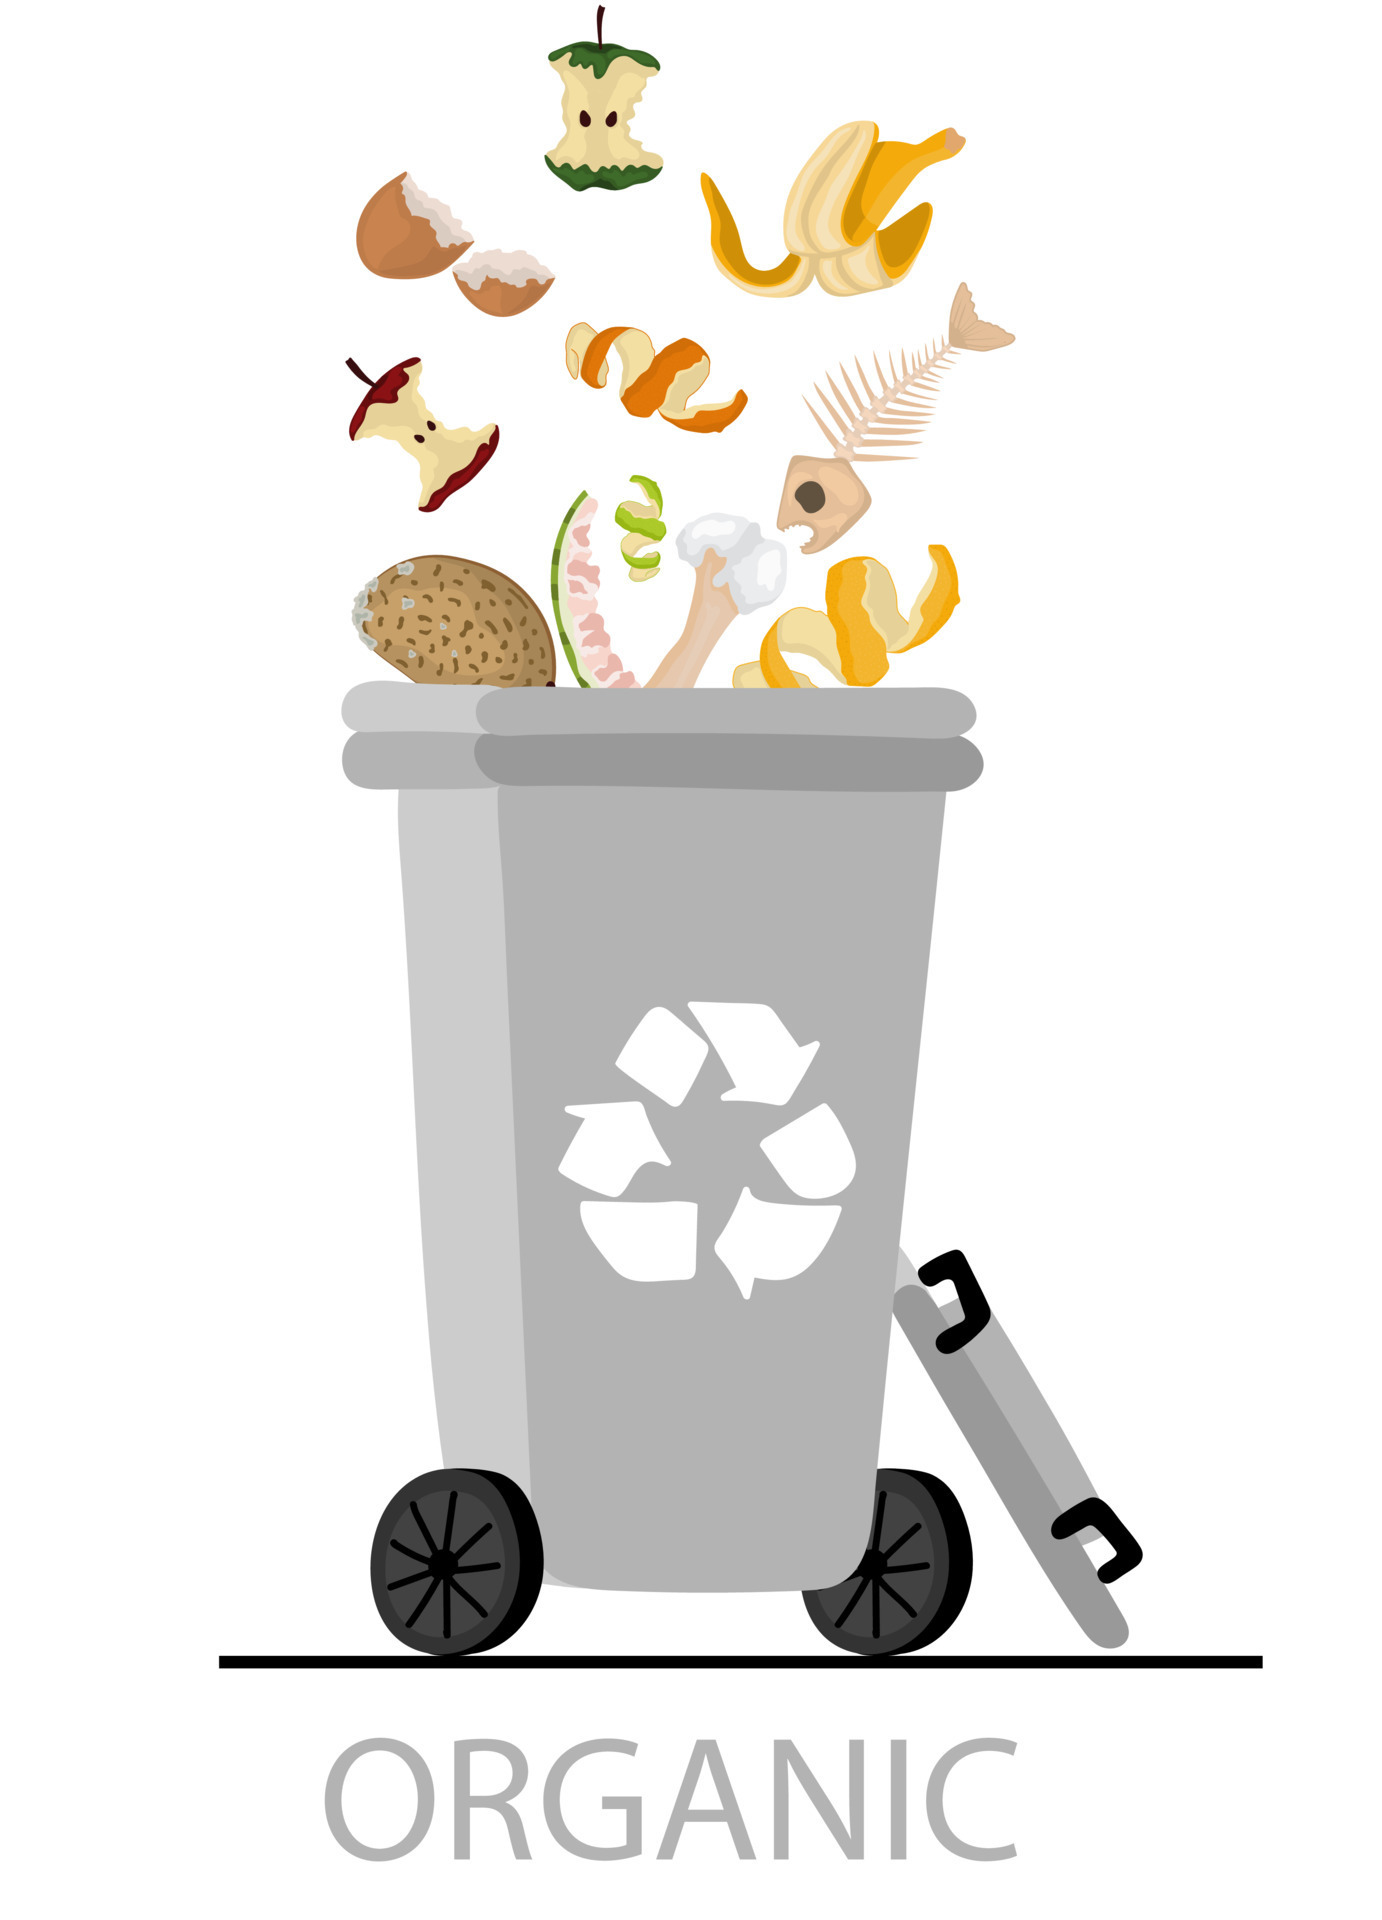 Trash sorting bins cartoon vector illustration by The Img ~ EpicPxls